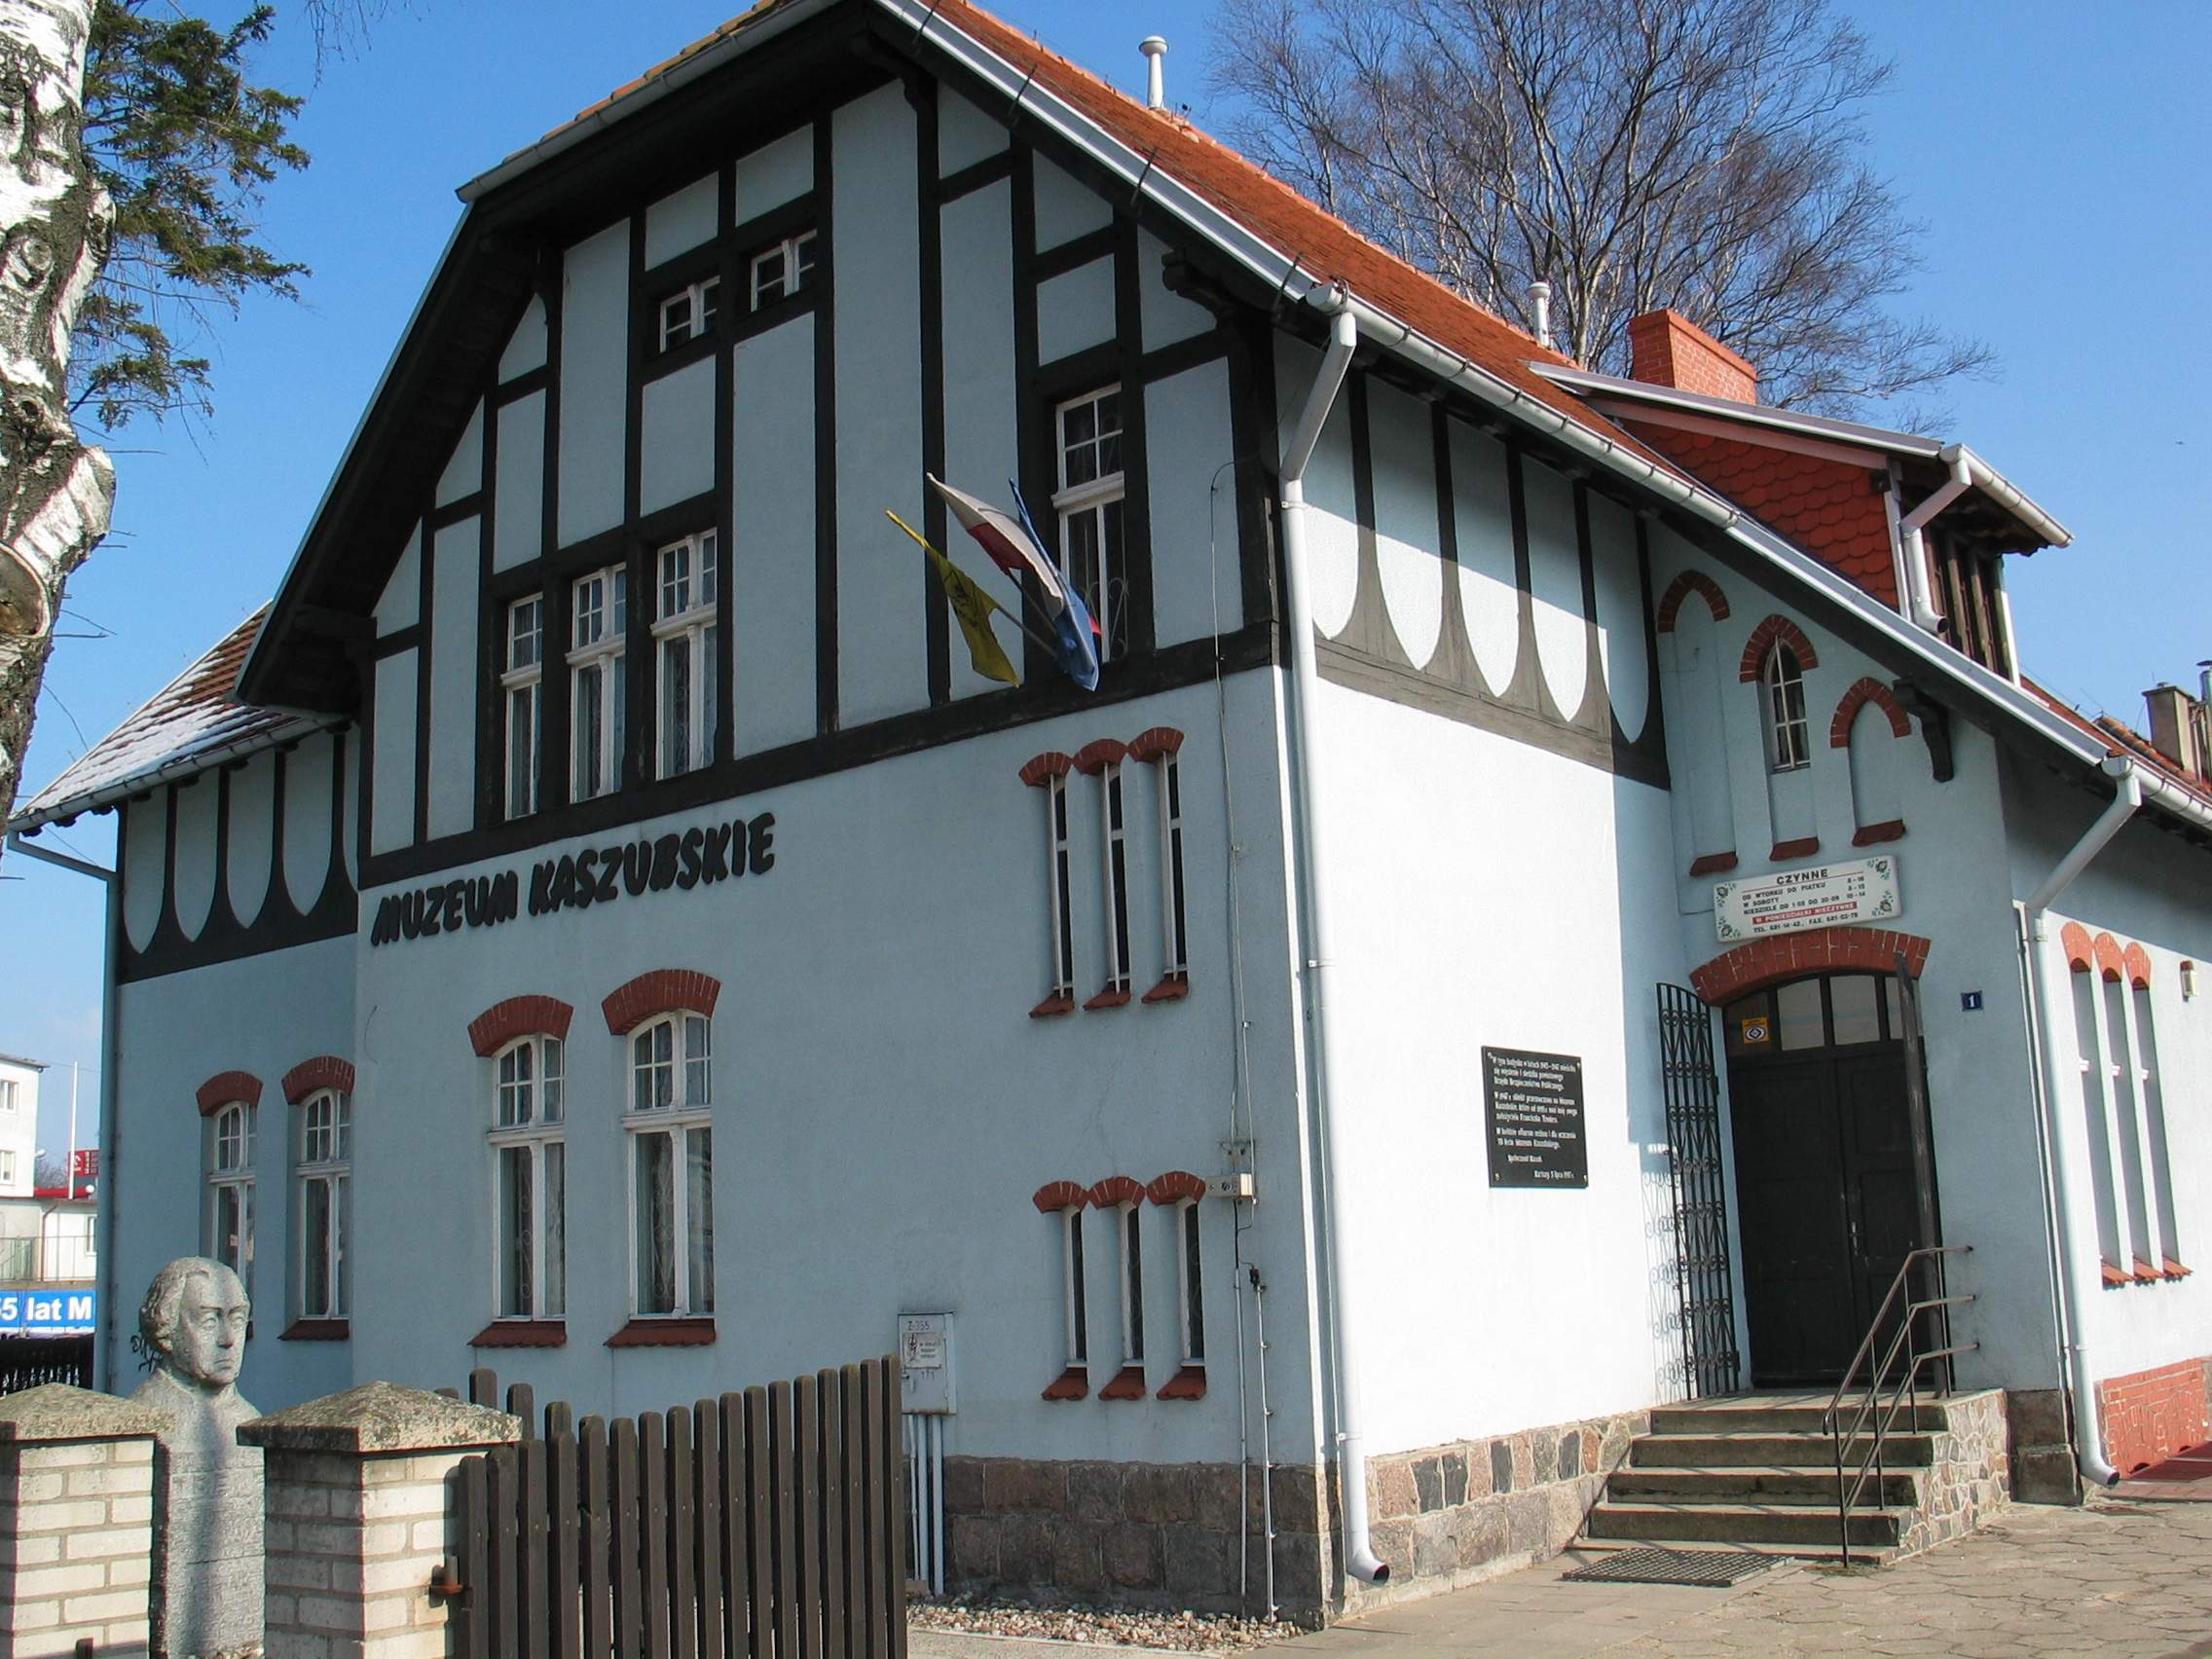 Muzeum Kaszubskie